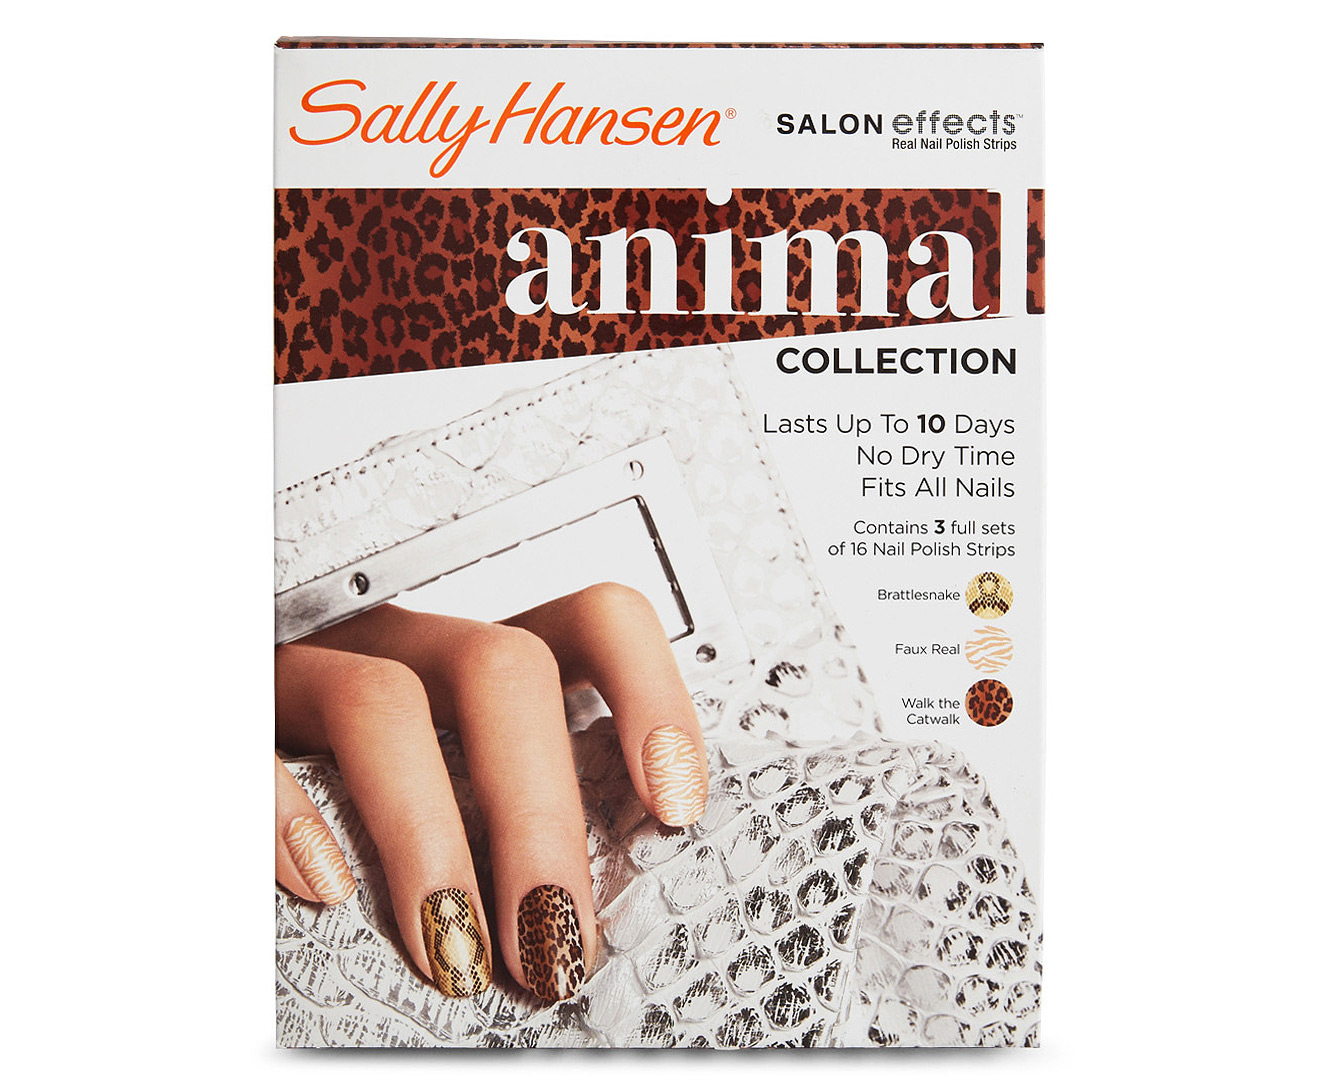 Sally Hansen Salon Effects Real Nail Polish Strips - wide 6